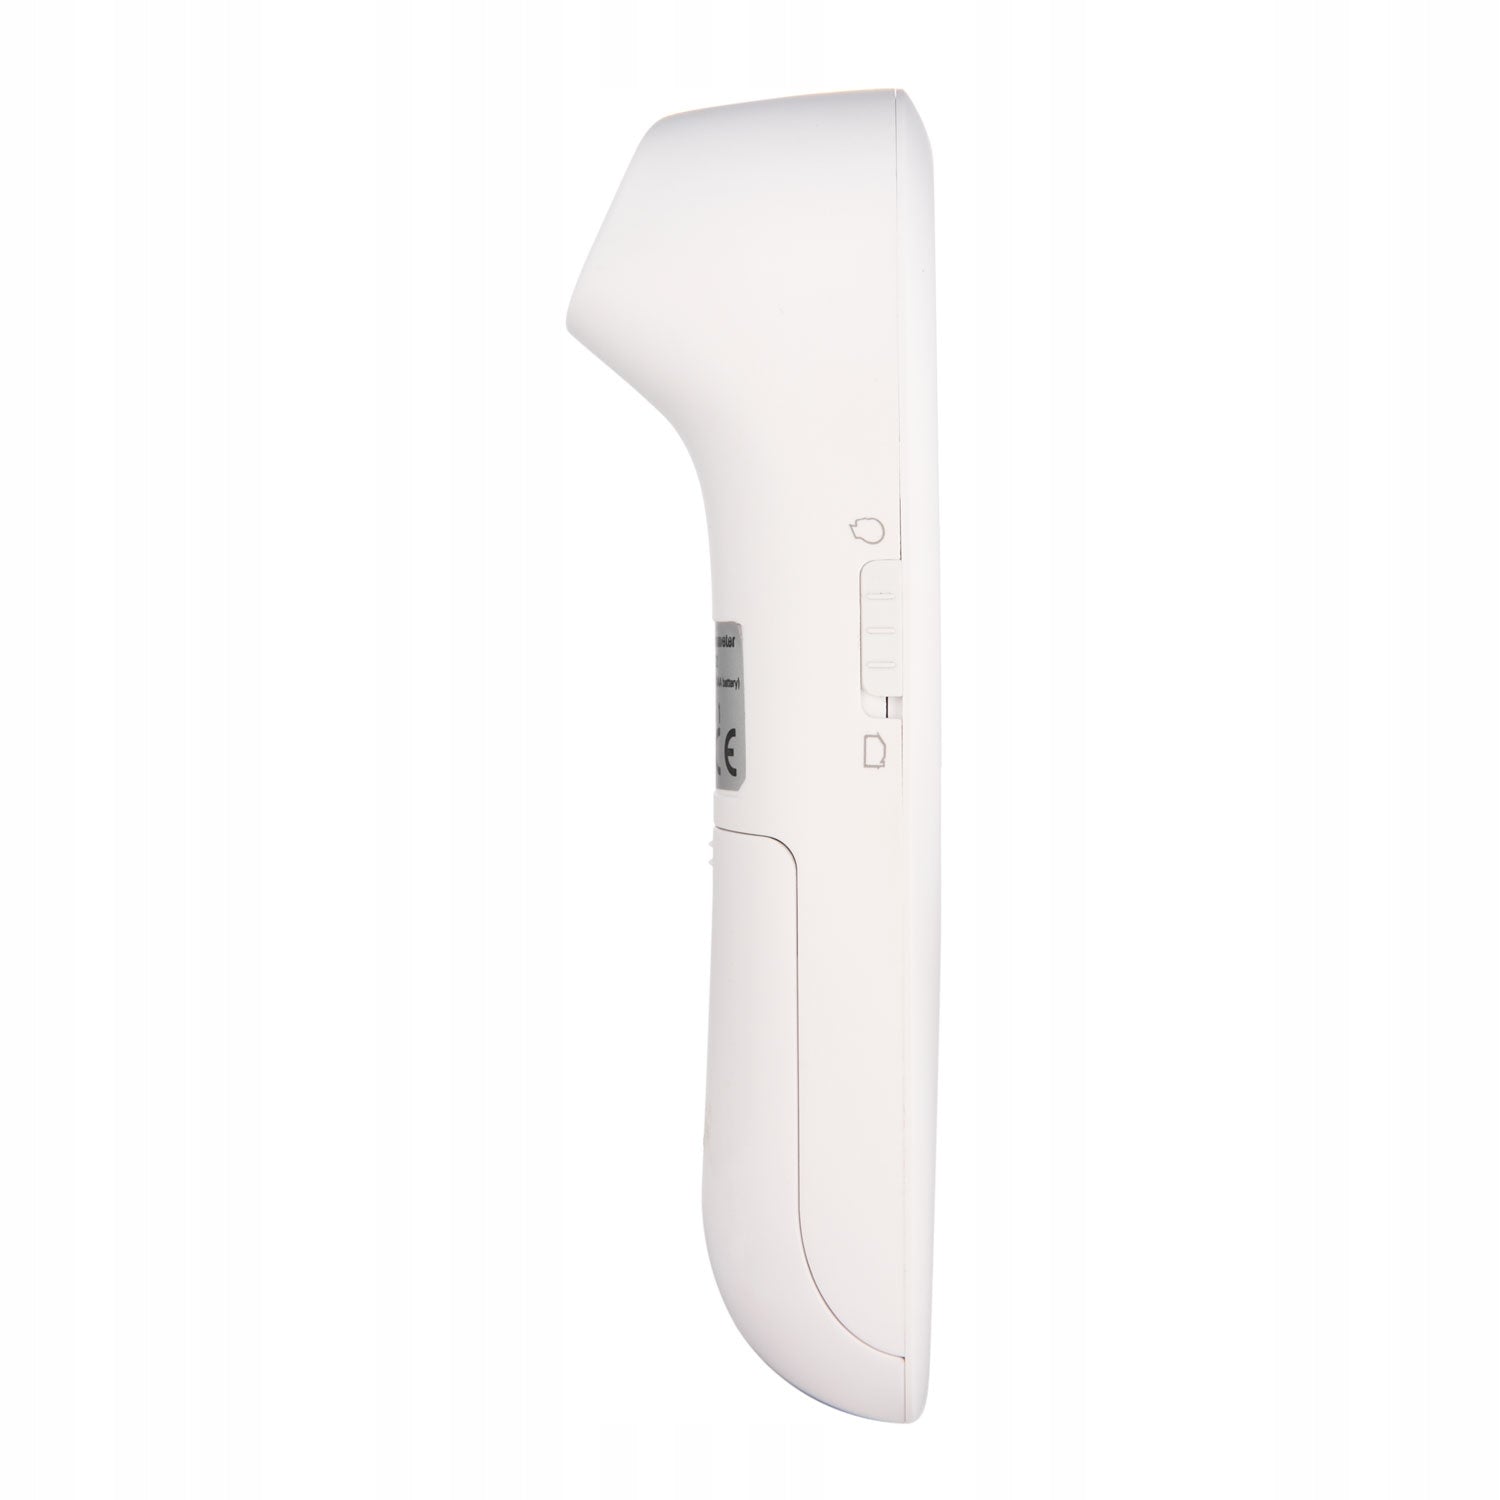 Bebés CANPOL: termómetro infrarrojo sin contacto fácil